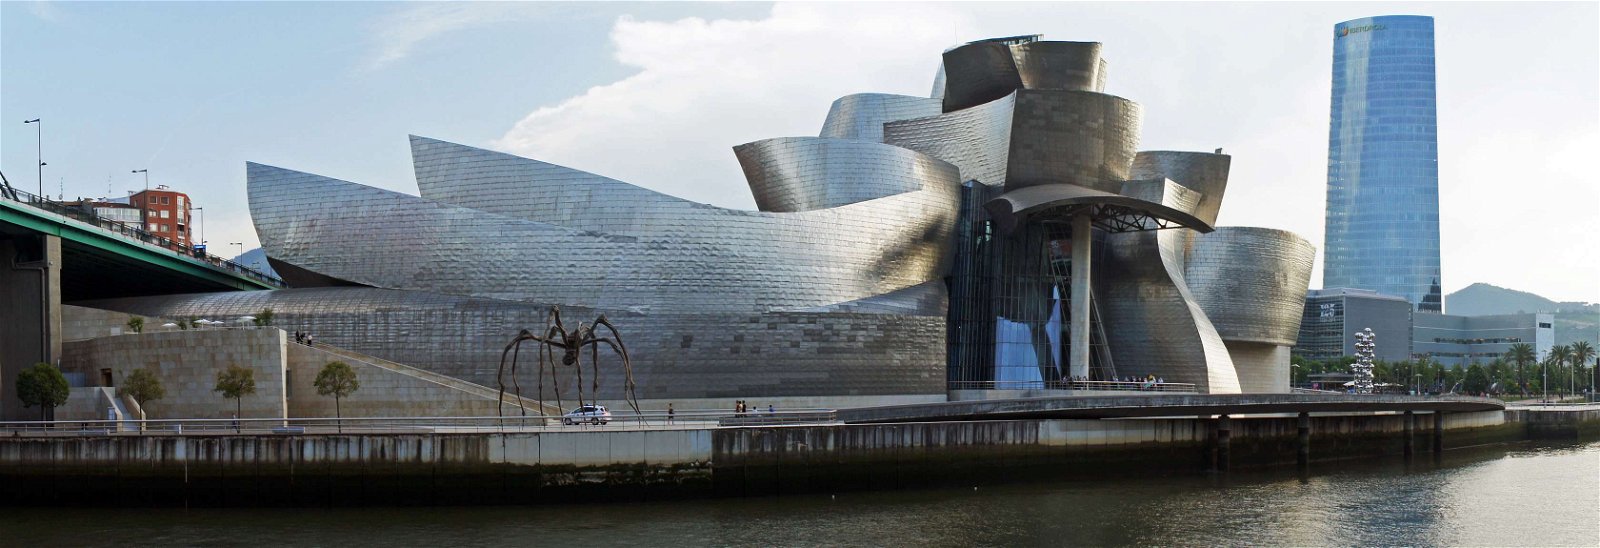 Guggenheim Museum Bilbao (Bilbao) - Visitor Information & Reviews